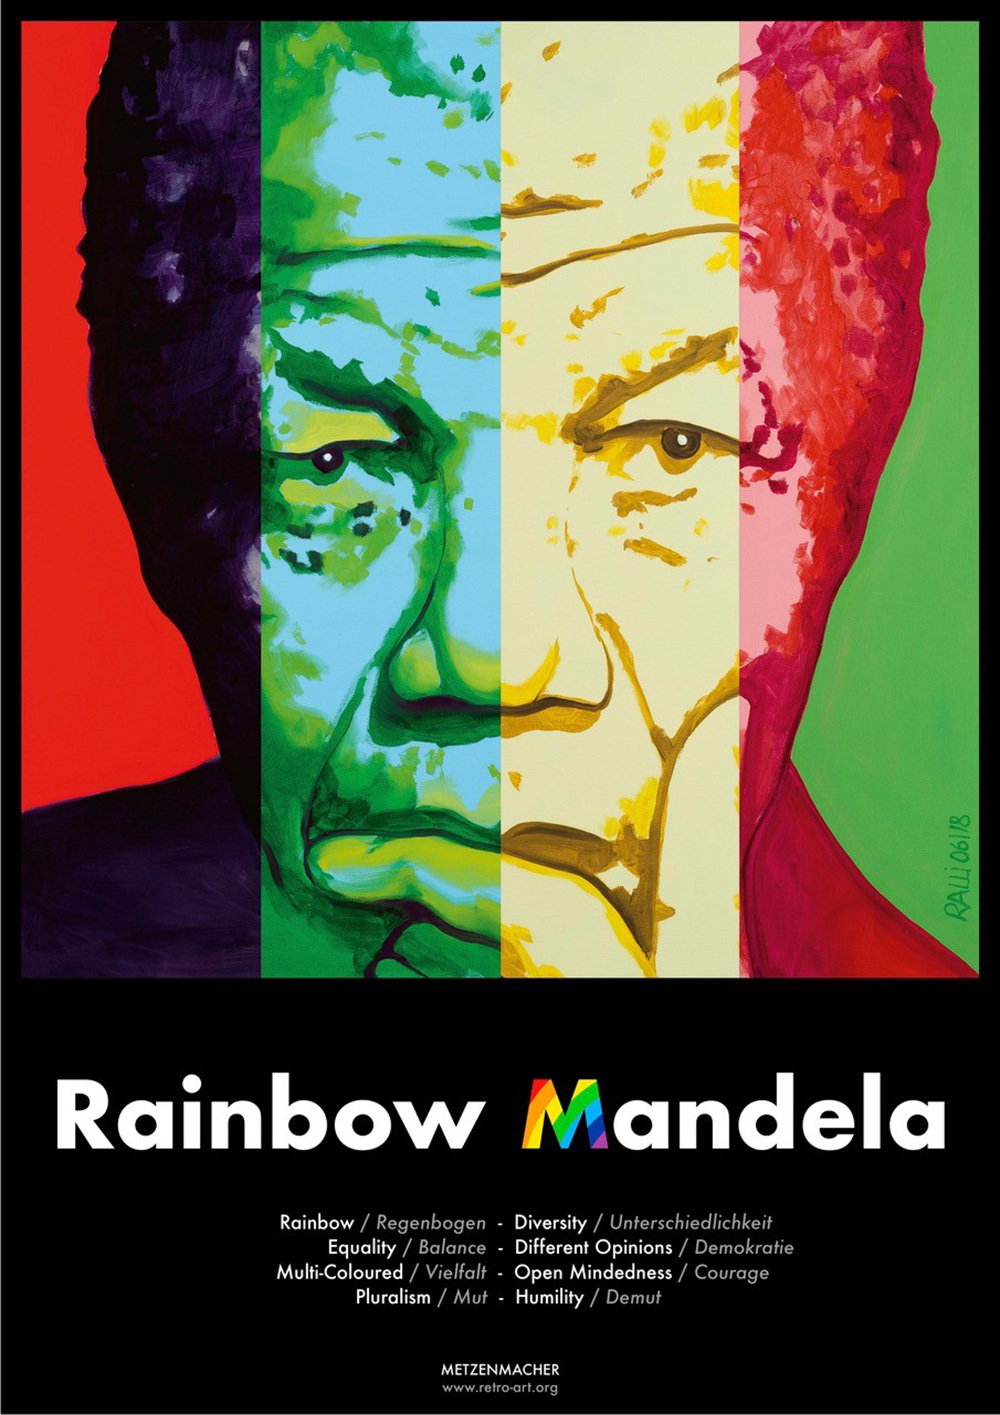 Ralf Metzenmacher - Rainbow Mandela